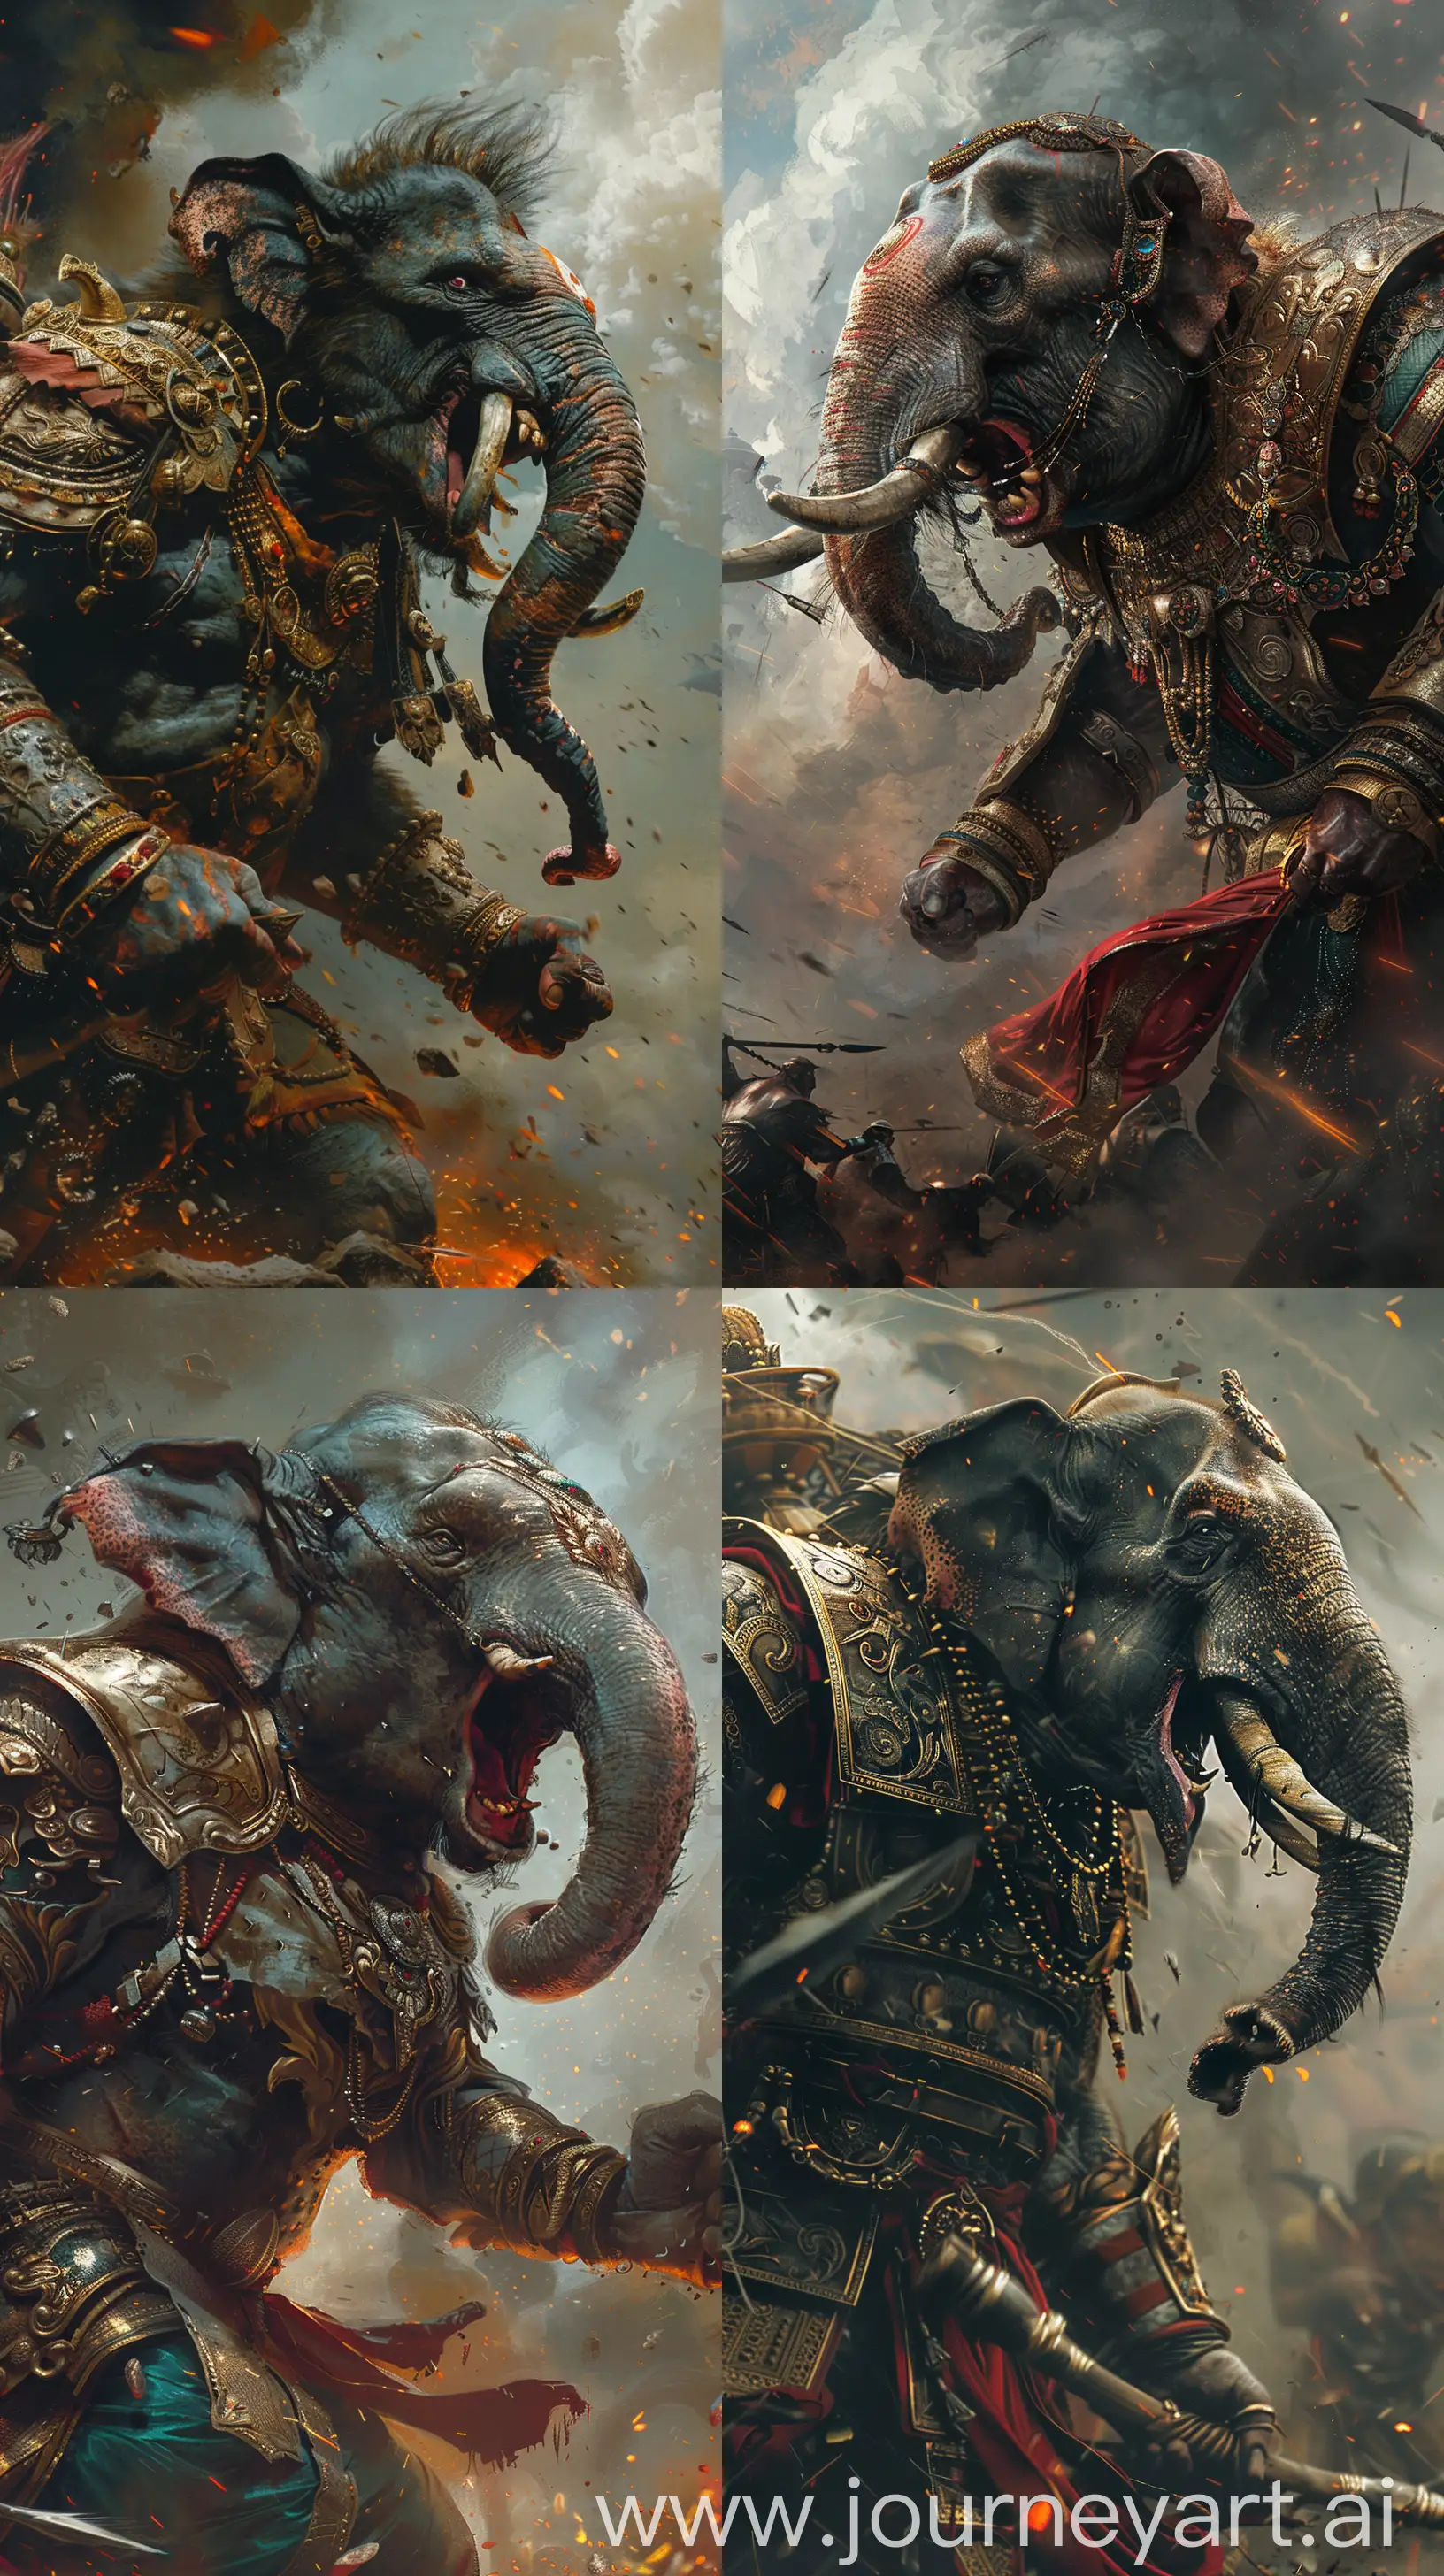 Fierce-Battle-Ancient-Indian-ElephantHeaded-Demon-in-Mythological-Epic-Style